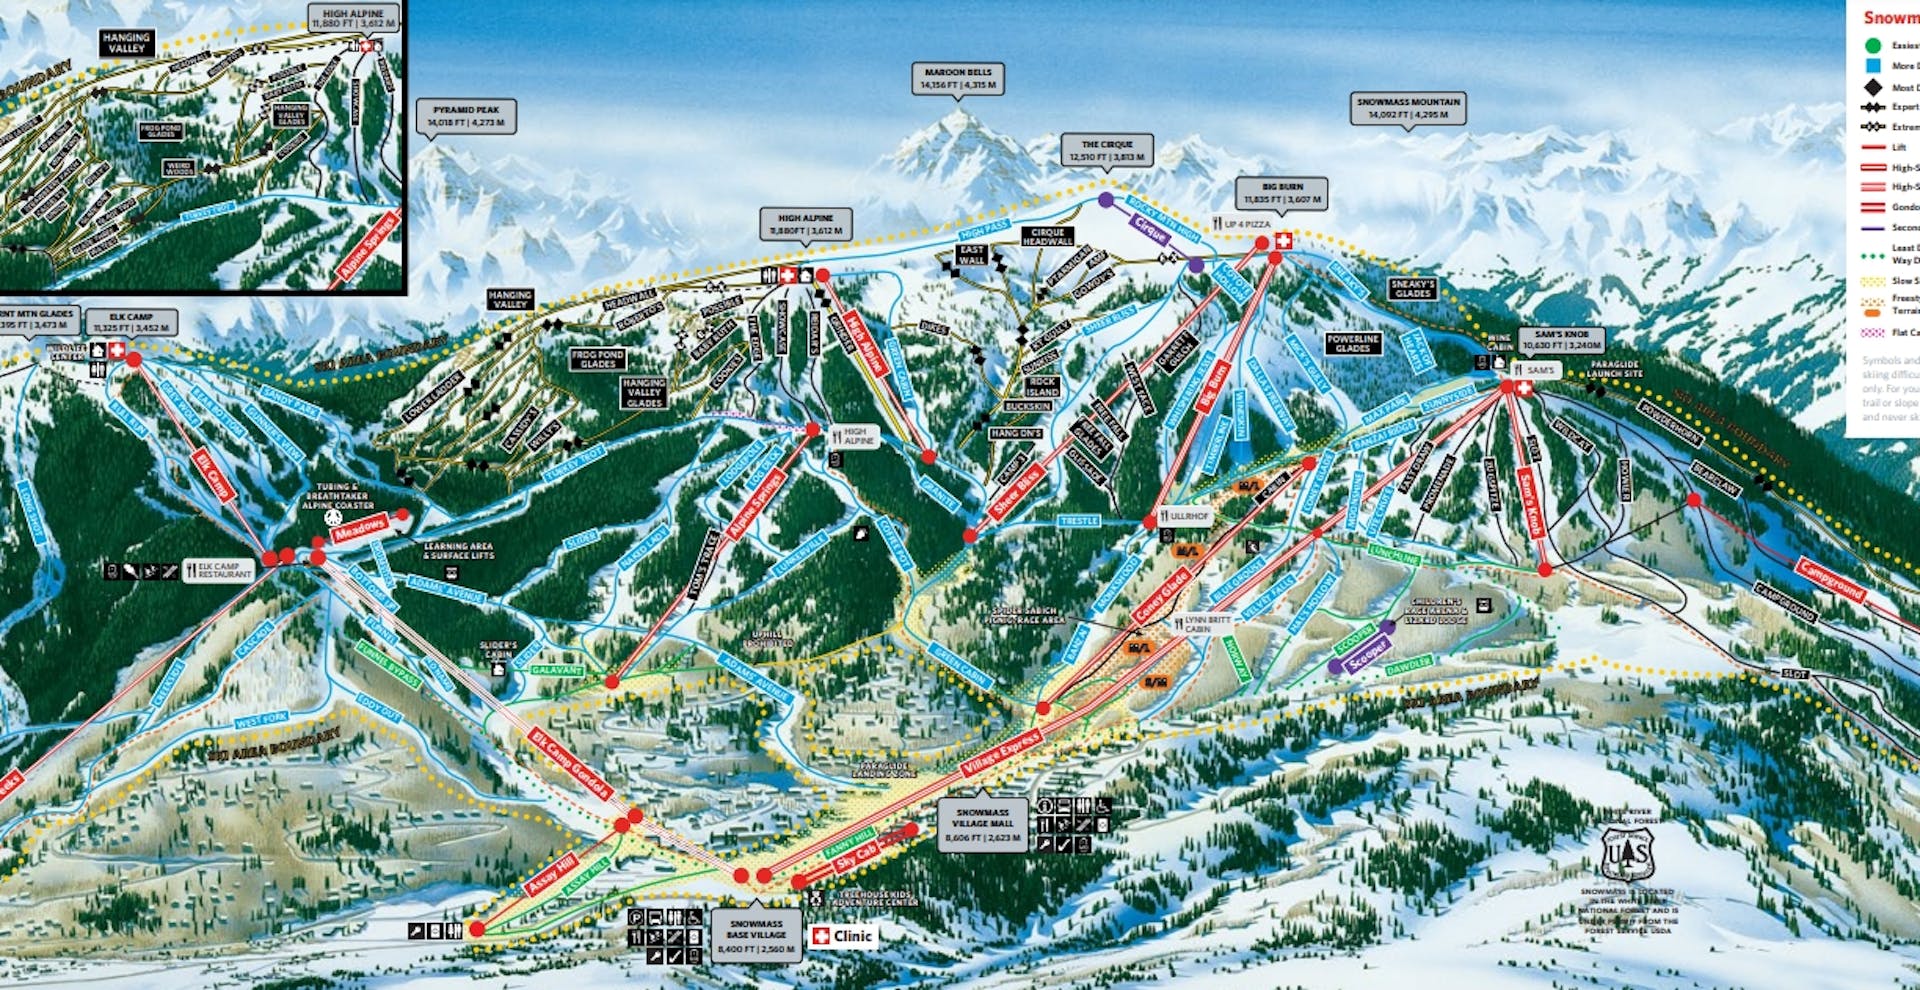 Snowmass Trail map